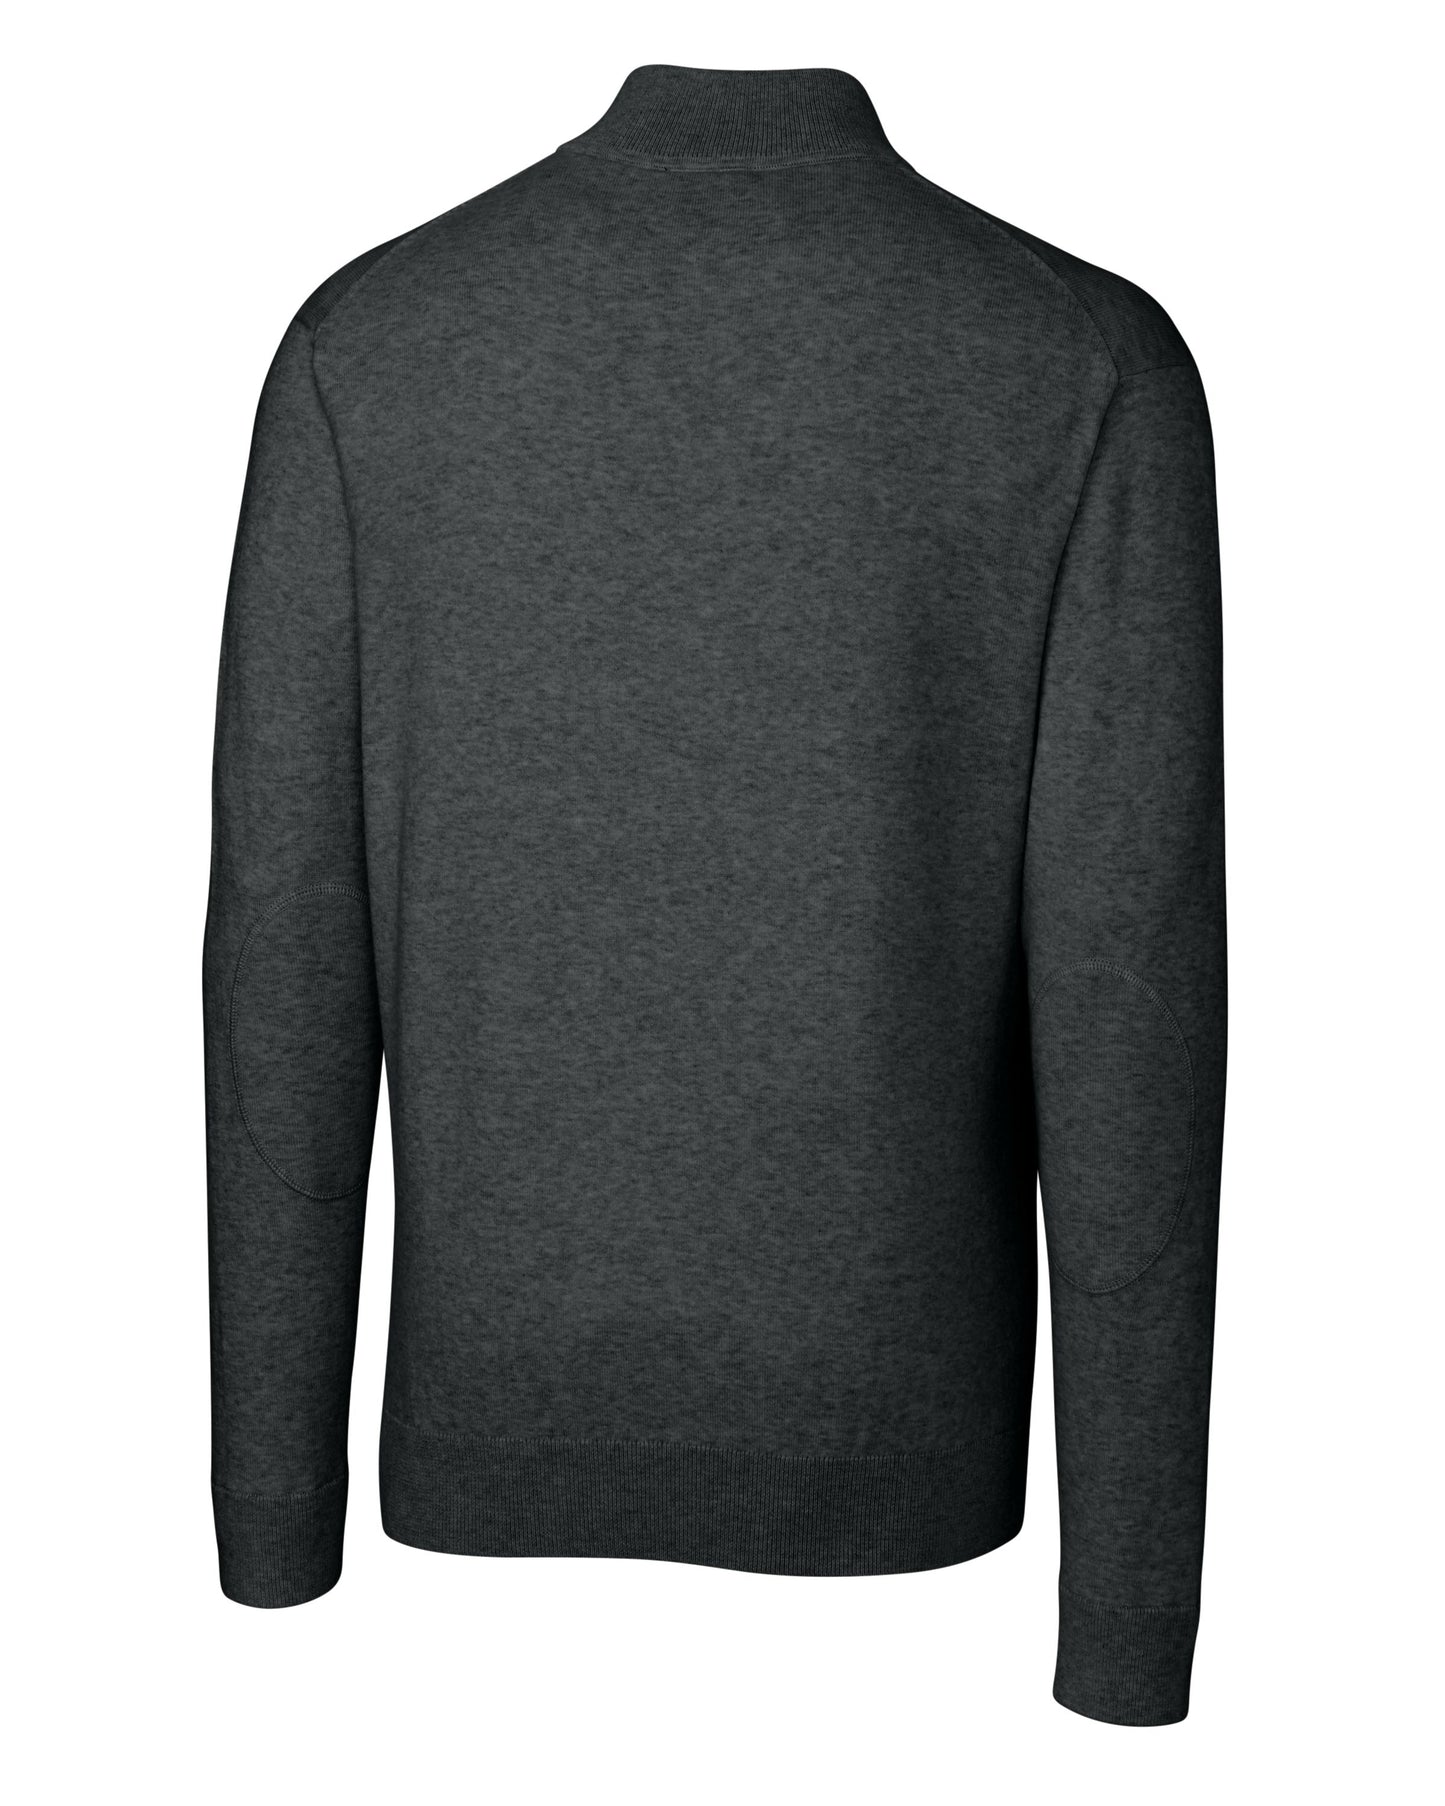 Cutter & Buck Lakemont 1/4 Zip Sweater Charcoal Heather